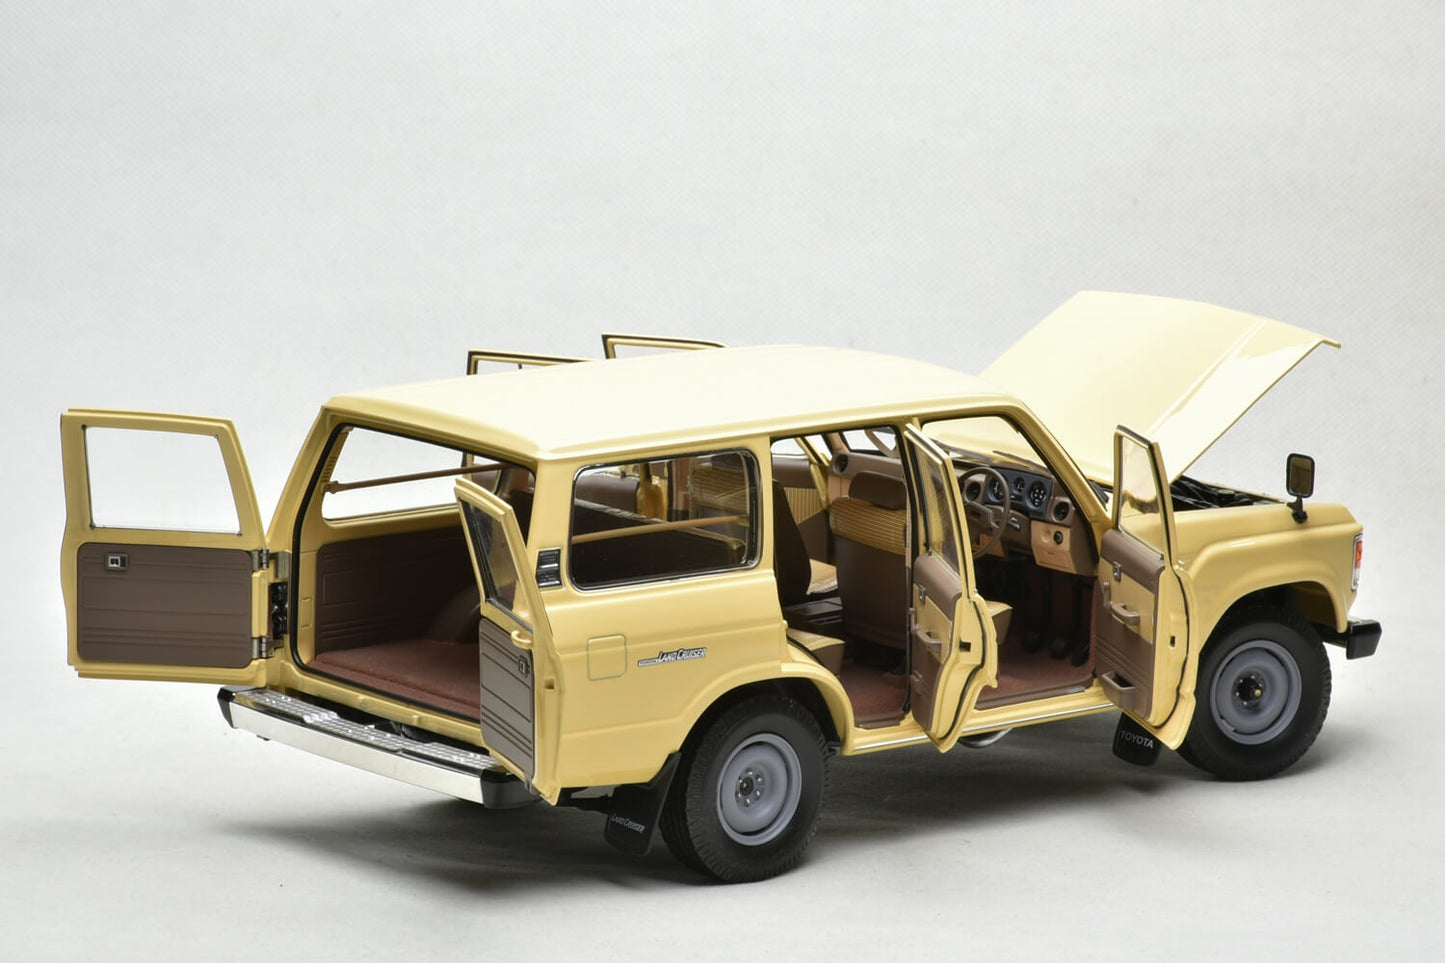 Toyota Land Cruiser 60 1980-1989 Vintage suv 1:18 diecast model car